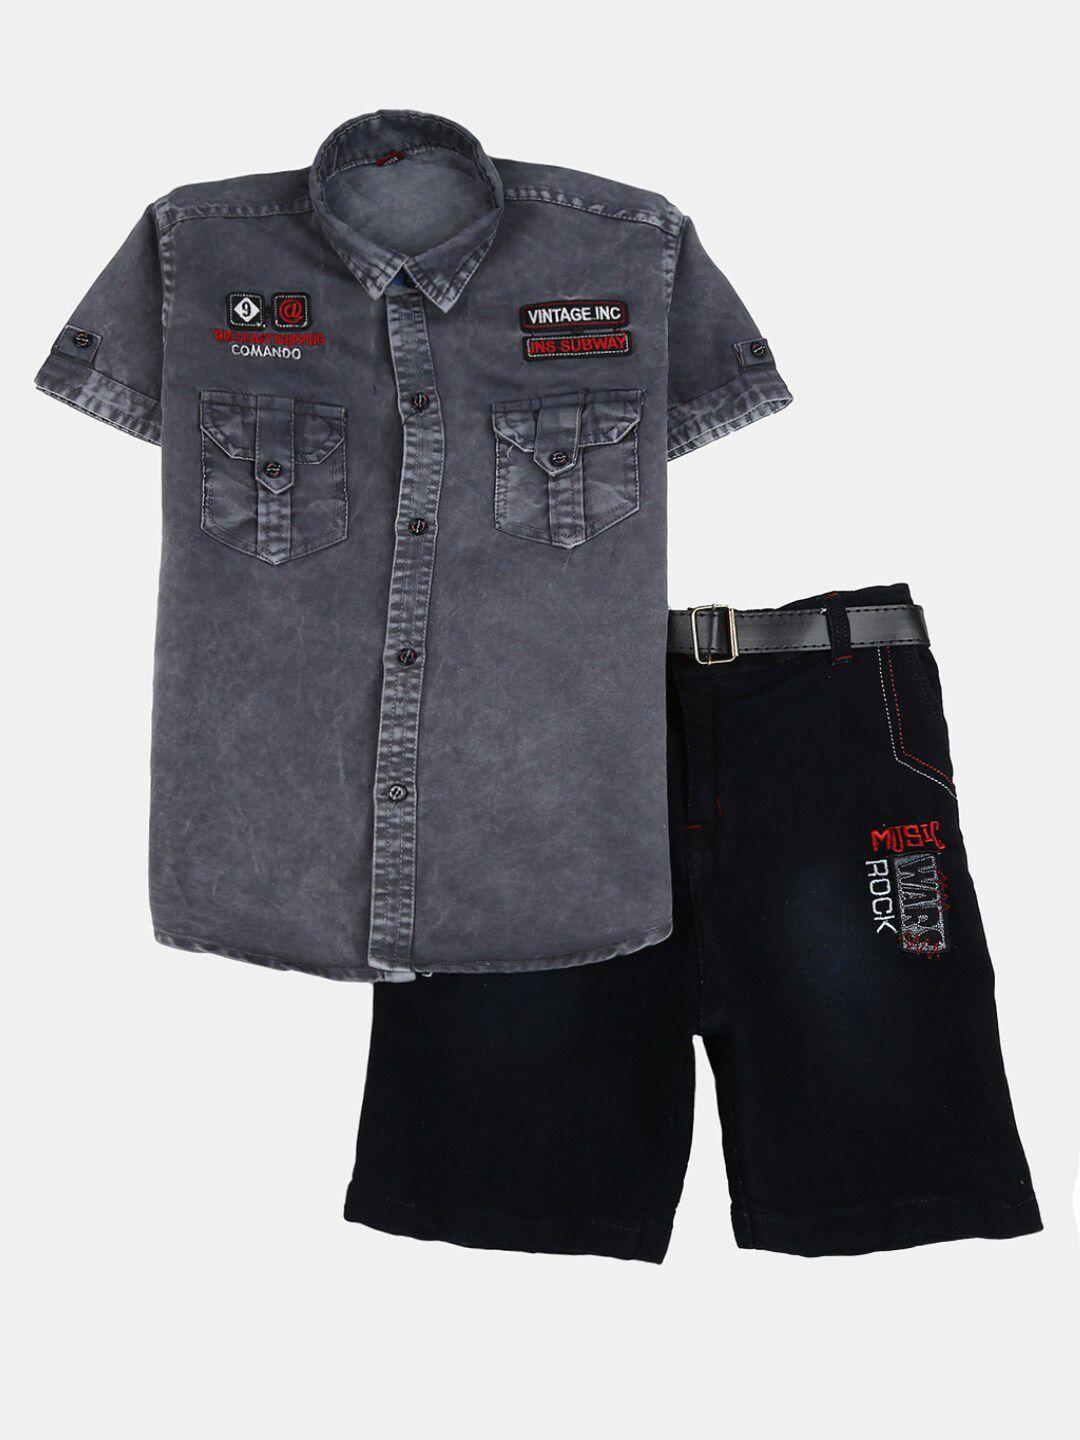 v-mart unisex kids grey & black pure cotton shirt with shorts